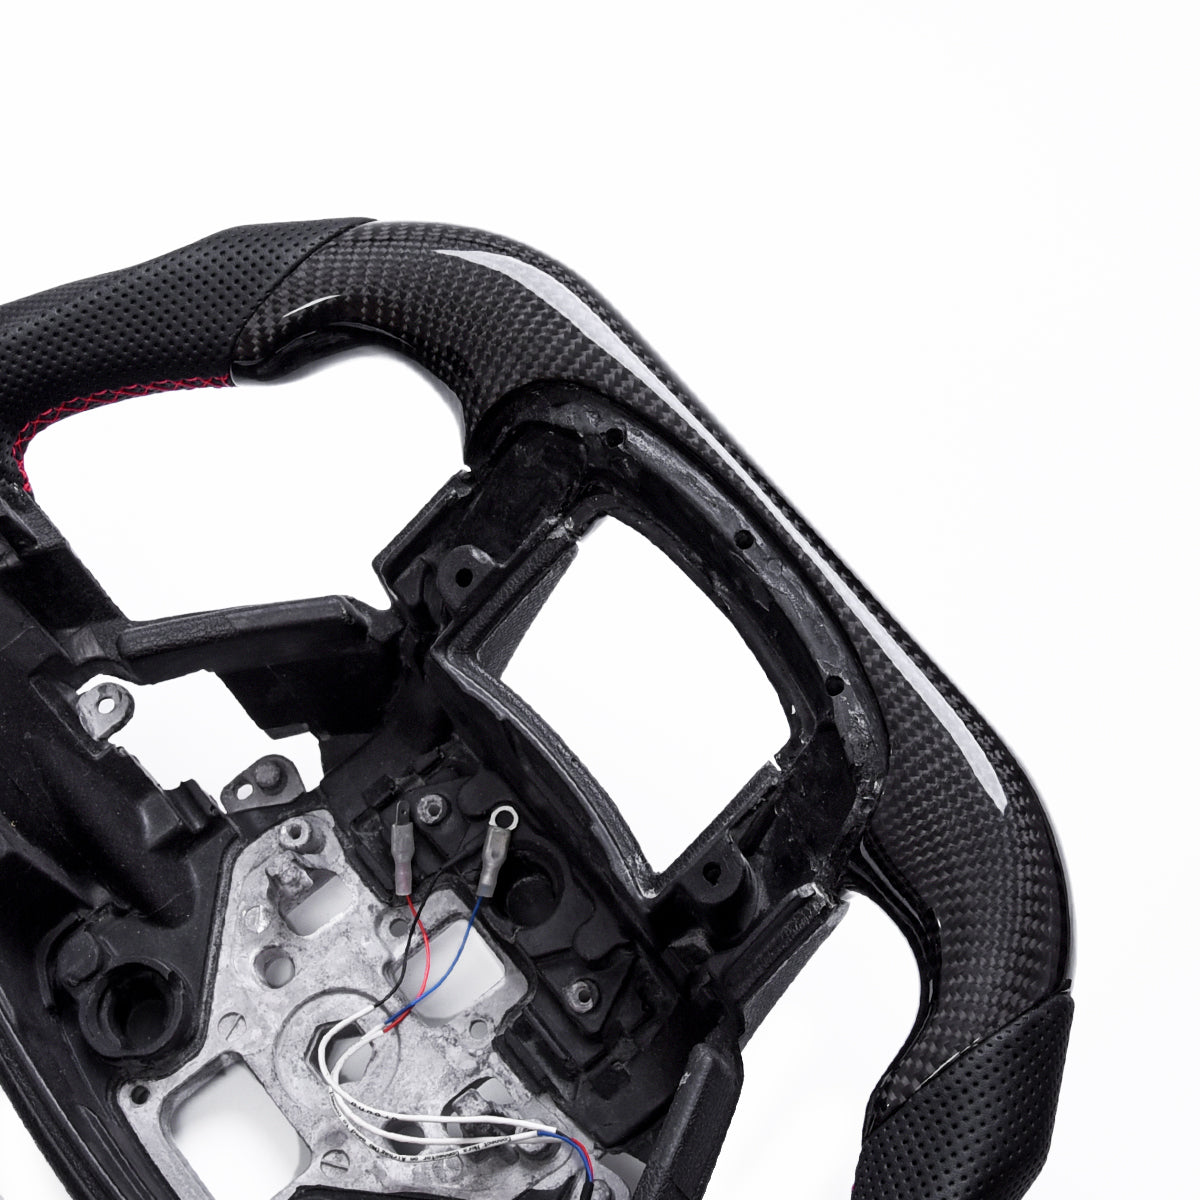 Revolve LED Carbon Fiber OEM Steering Wheel Ford F-150 | F-250 | F-350 2015-2020 - revolvesteering